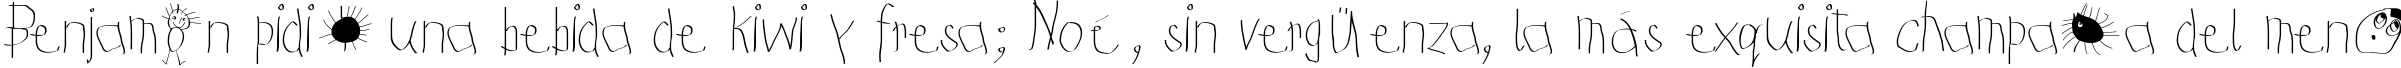 Пример написания шрифтом KidsFirstPrintFont текста на испанском